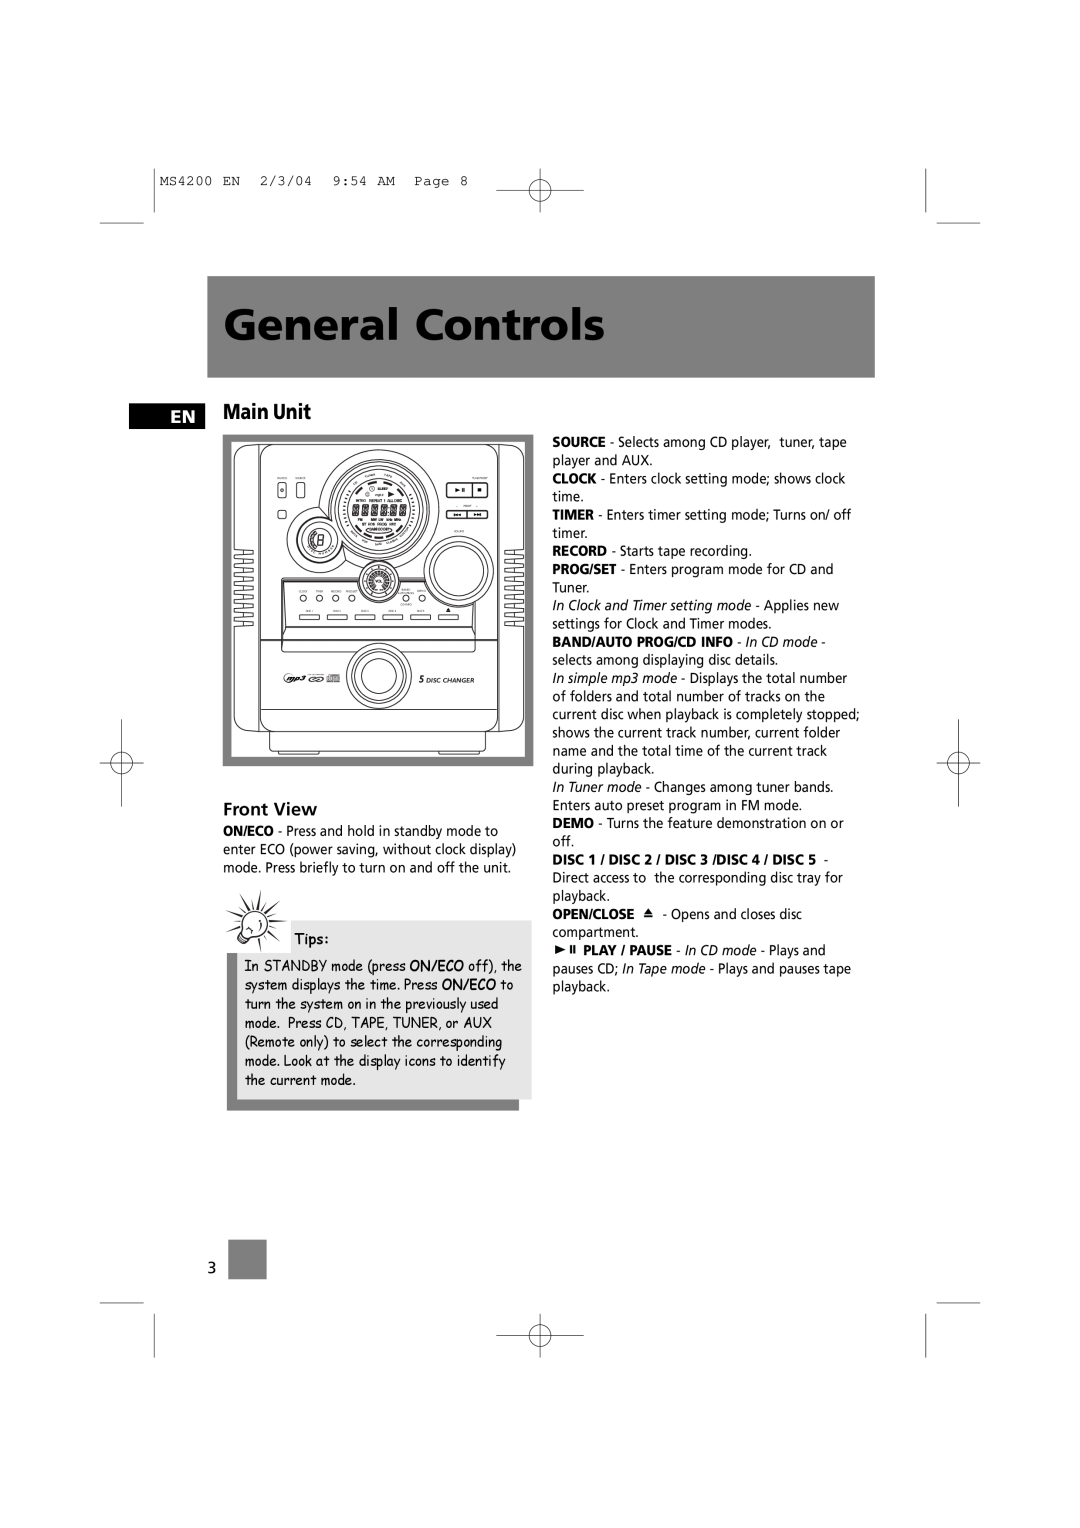 Technicolor - Thomson MS4200 manual General Controls, EN Main Unit, Tips 